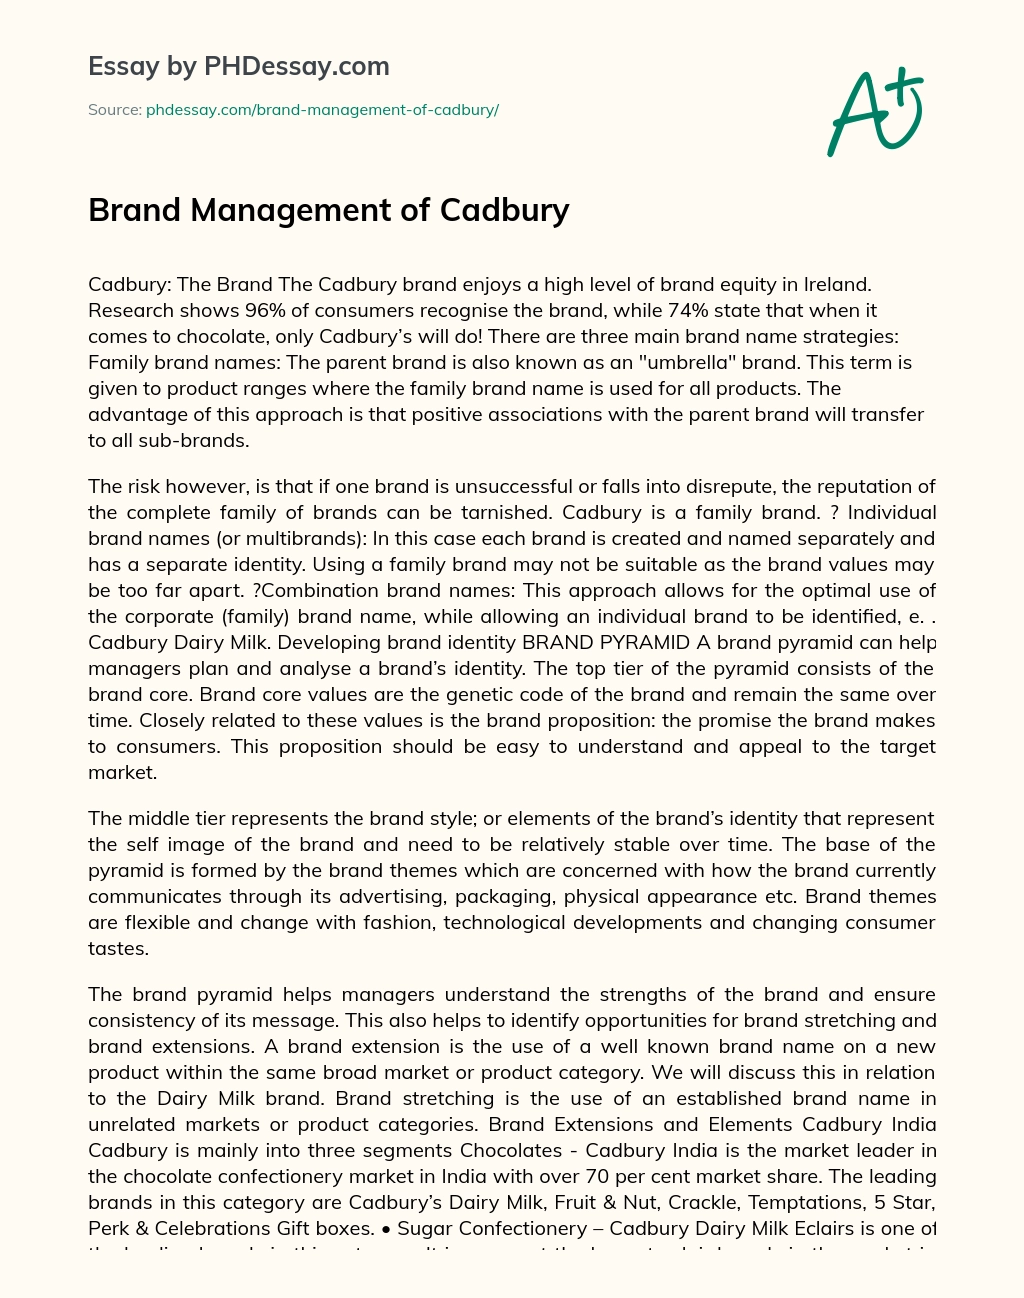 Brand Management of Cadbury essay